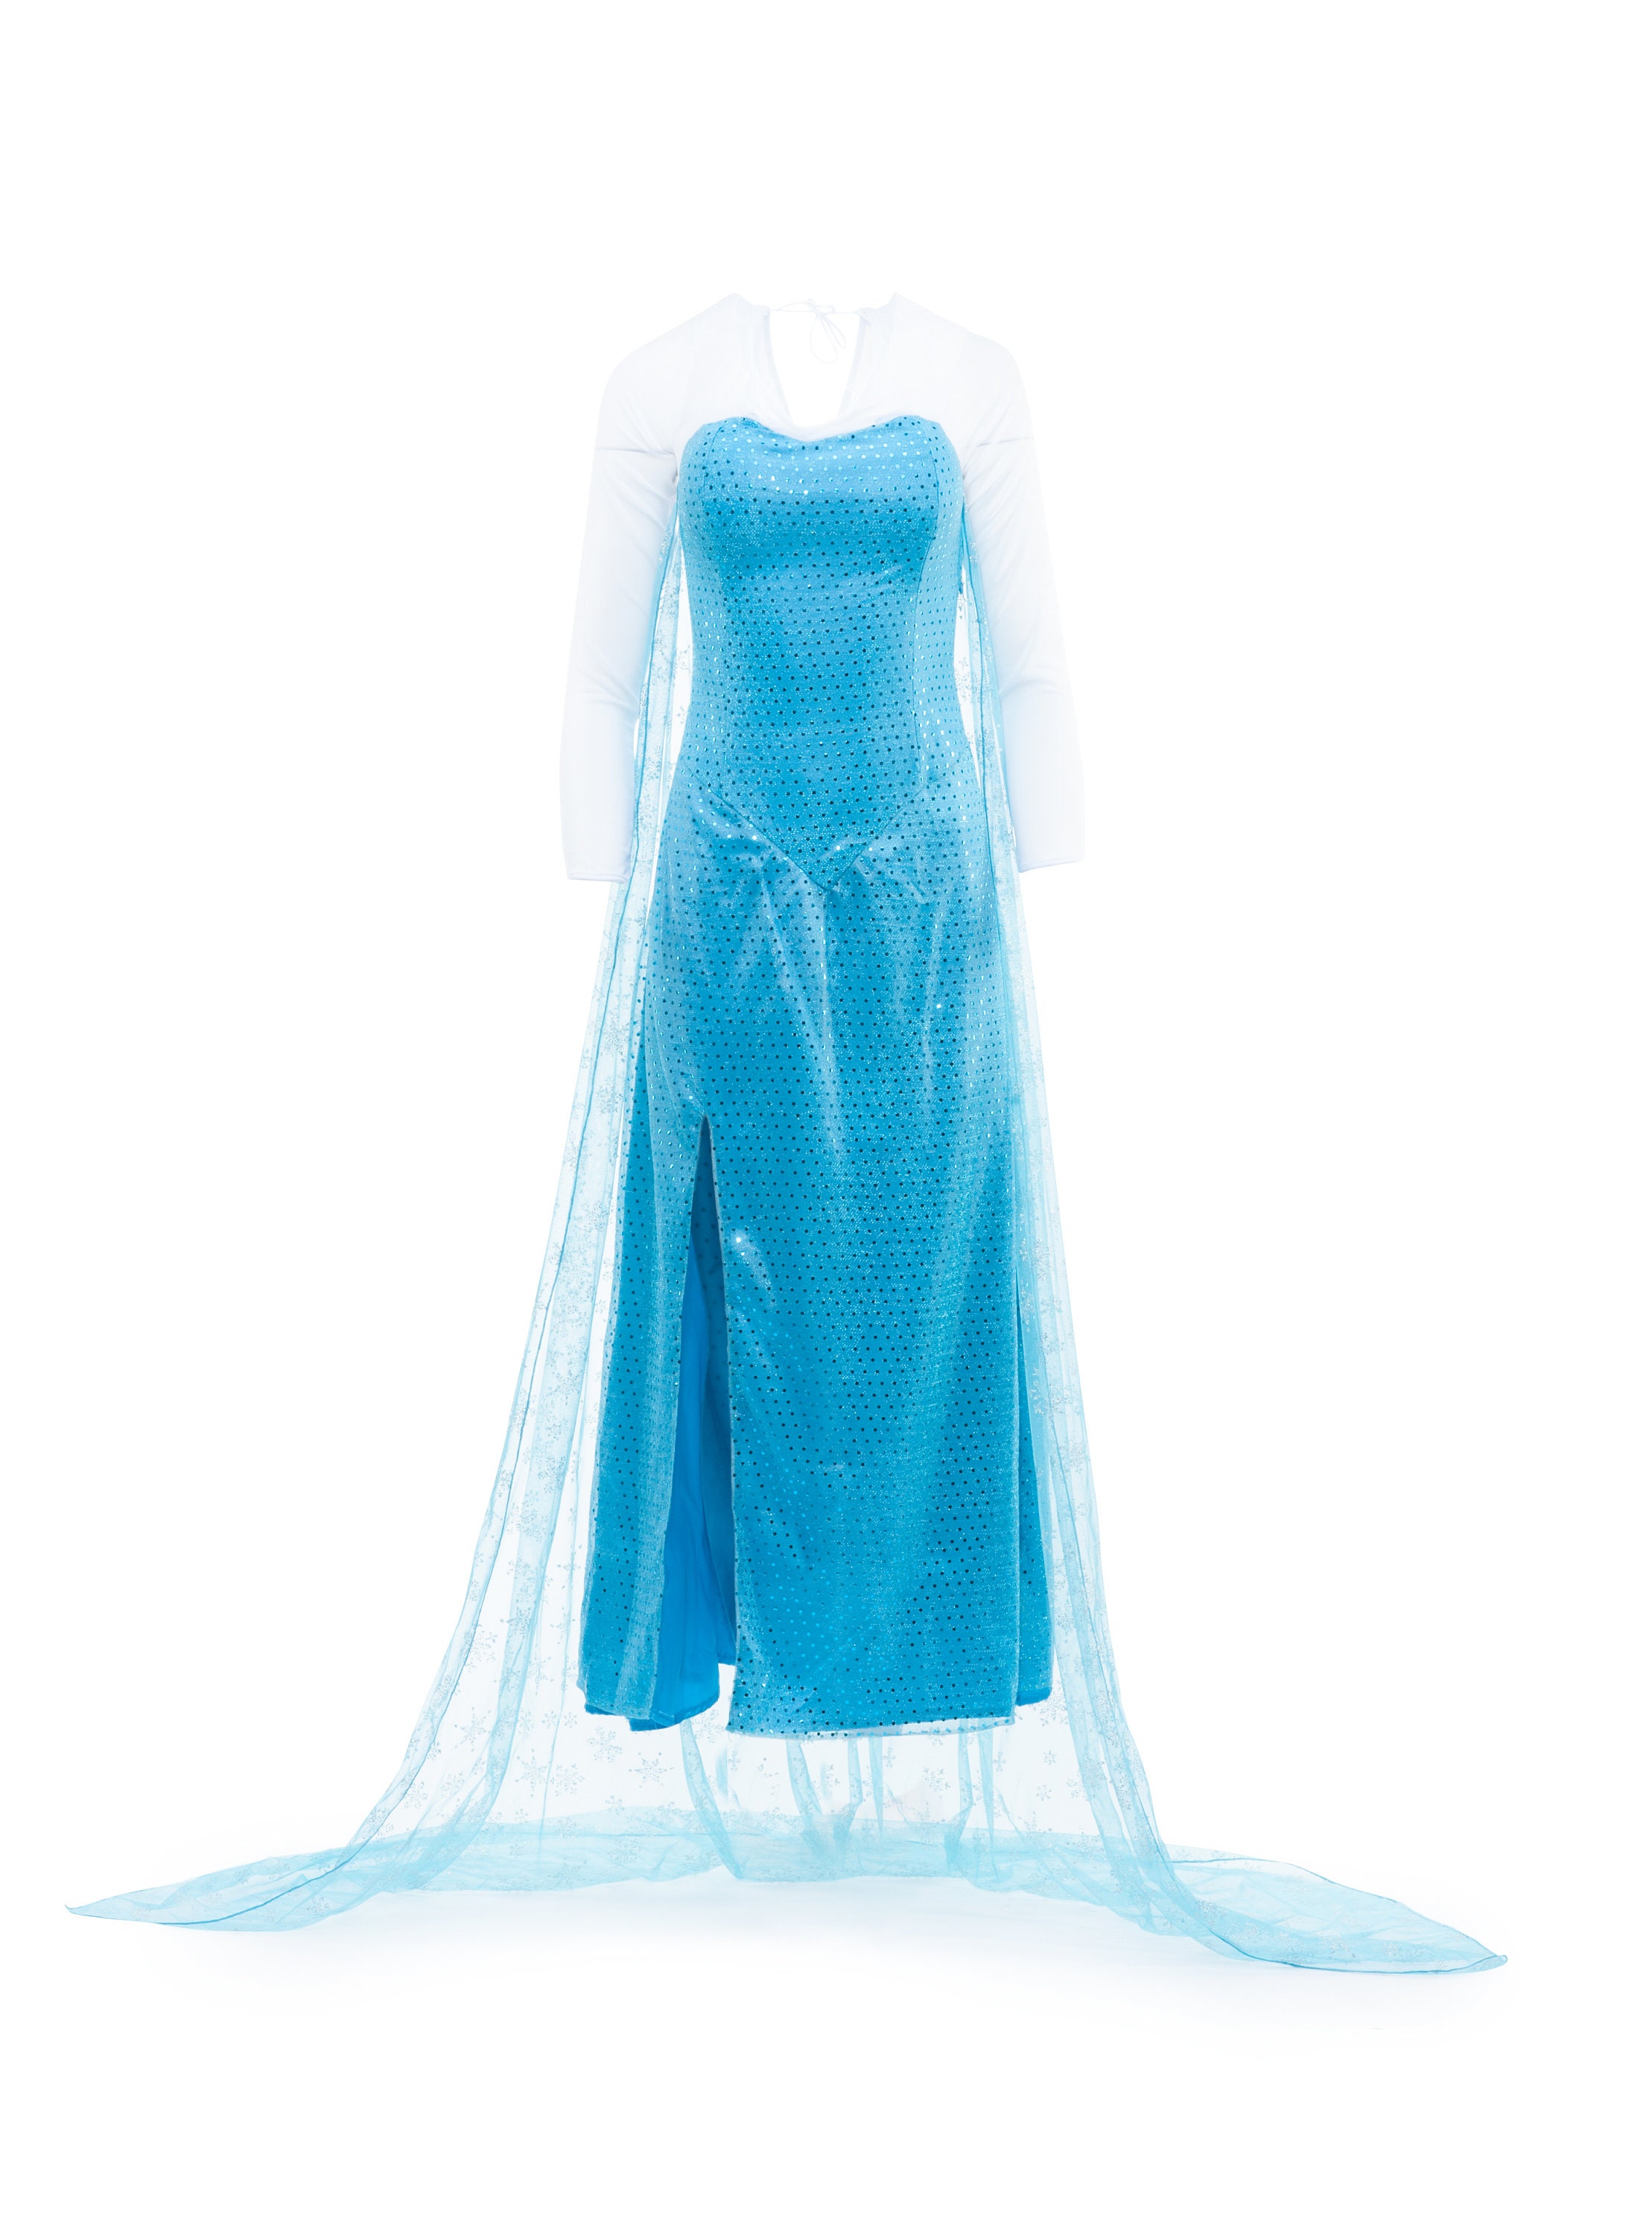 Elsa Costume Adult Ice Queen Frozen Dress for Women Elsa Inspired Dress Elsa  Princess Dress with Cloak, Blue XL : Amazon.in: Clothing & Accessories